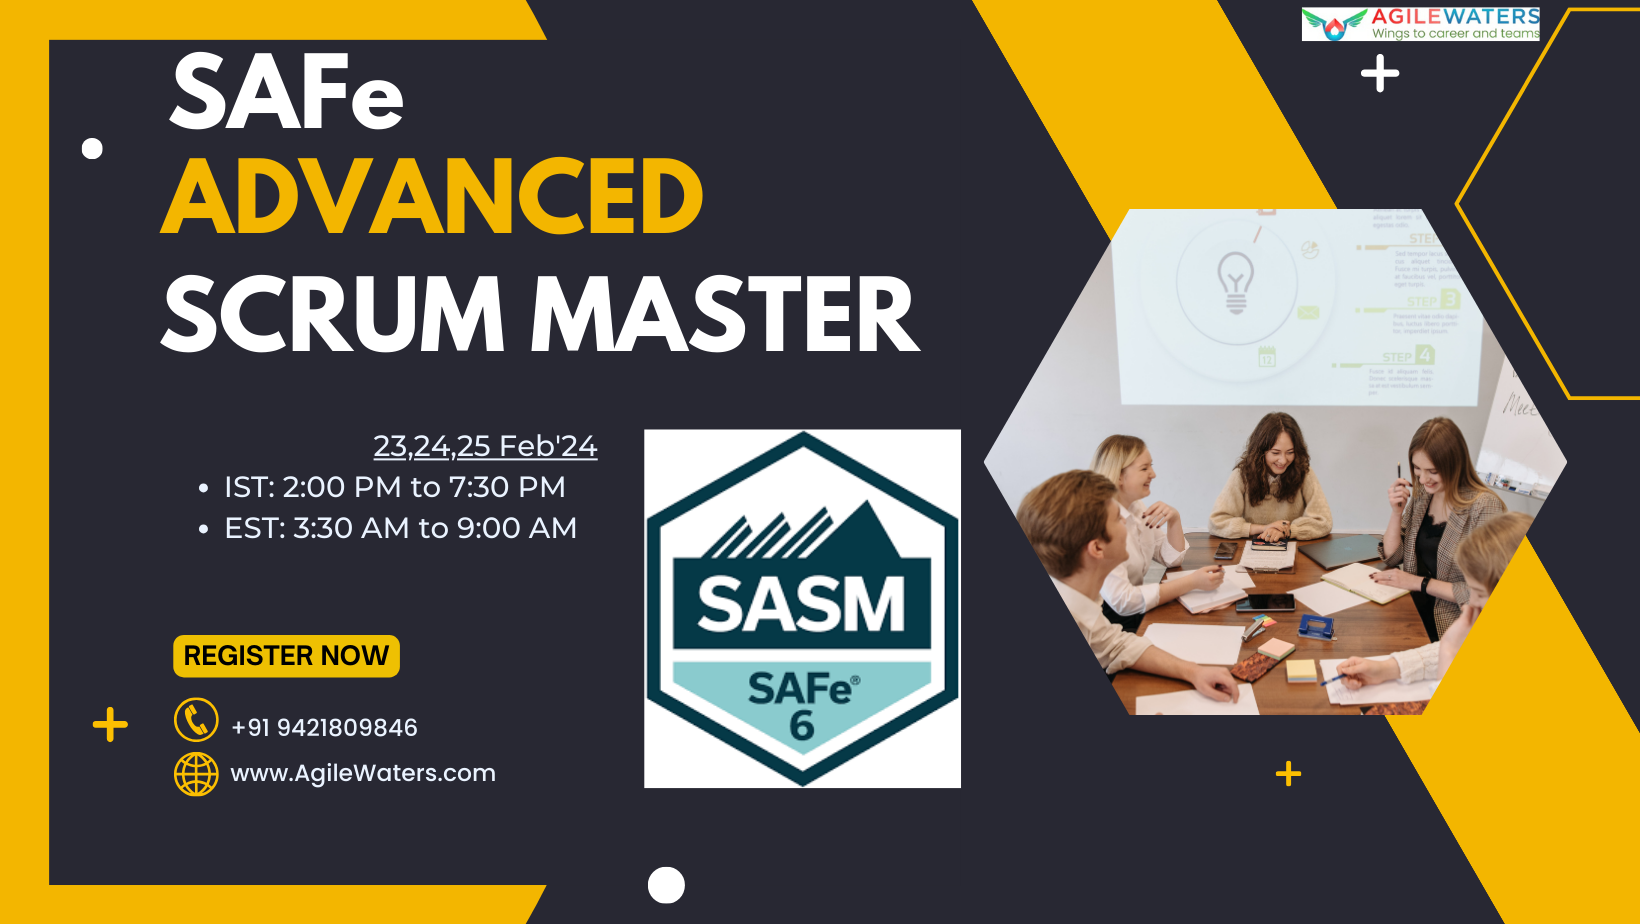 SAFe Advanced Scrum Master Certification Training, Online Event